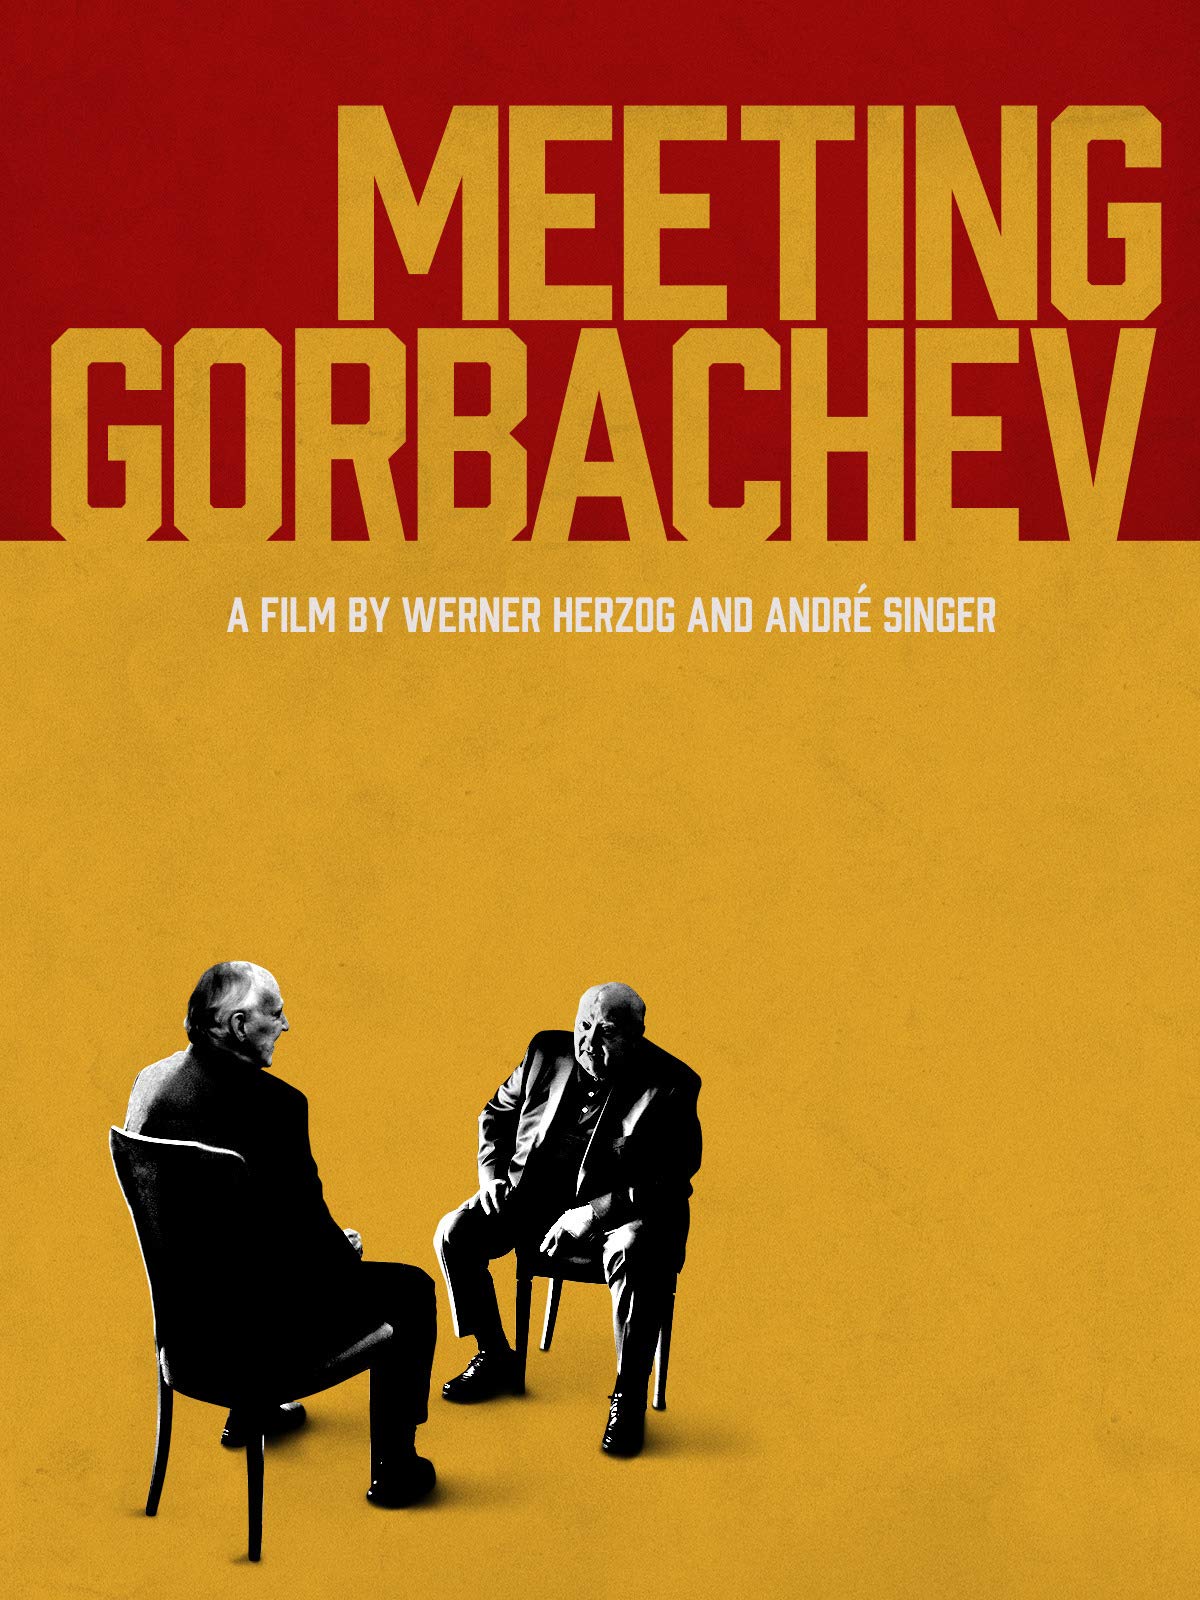 Gorbachev documentary illuminates history-making leader